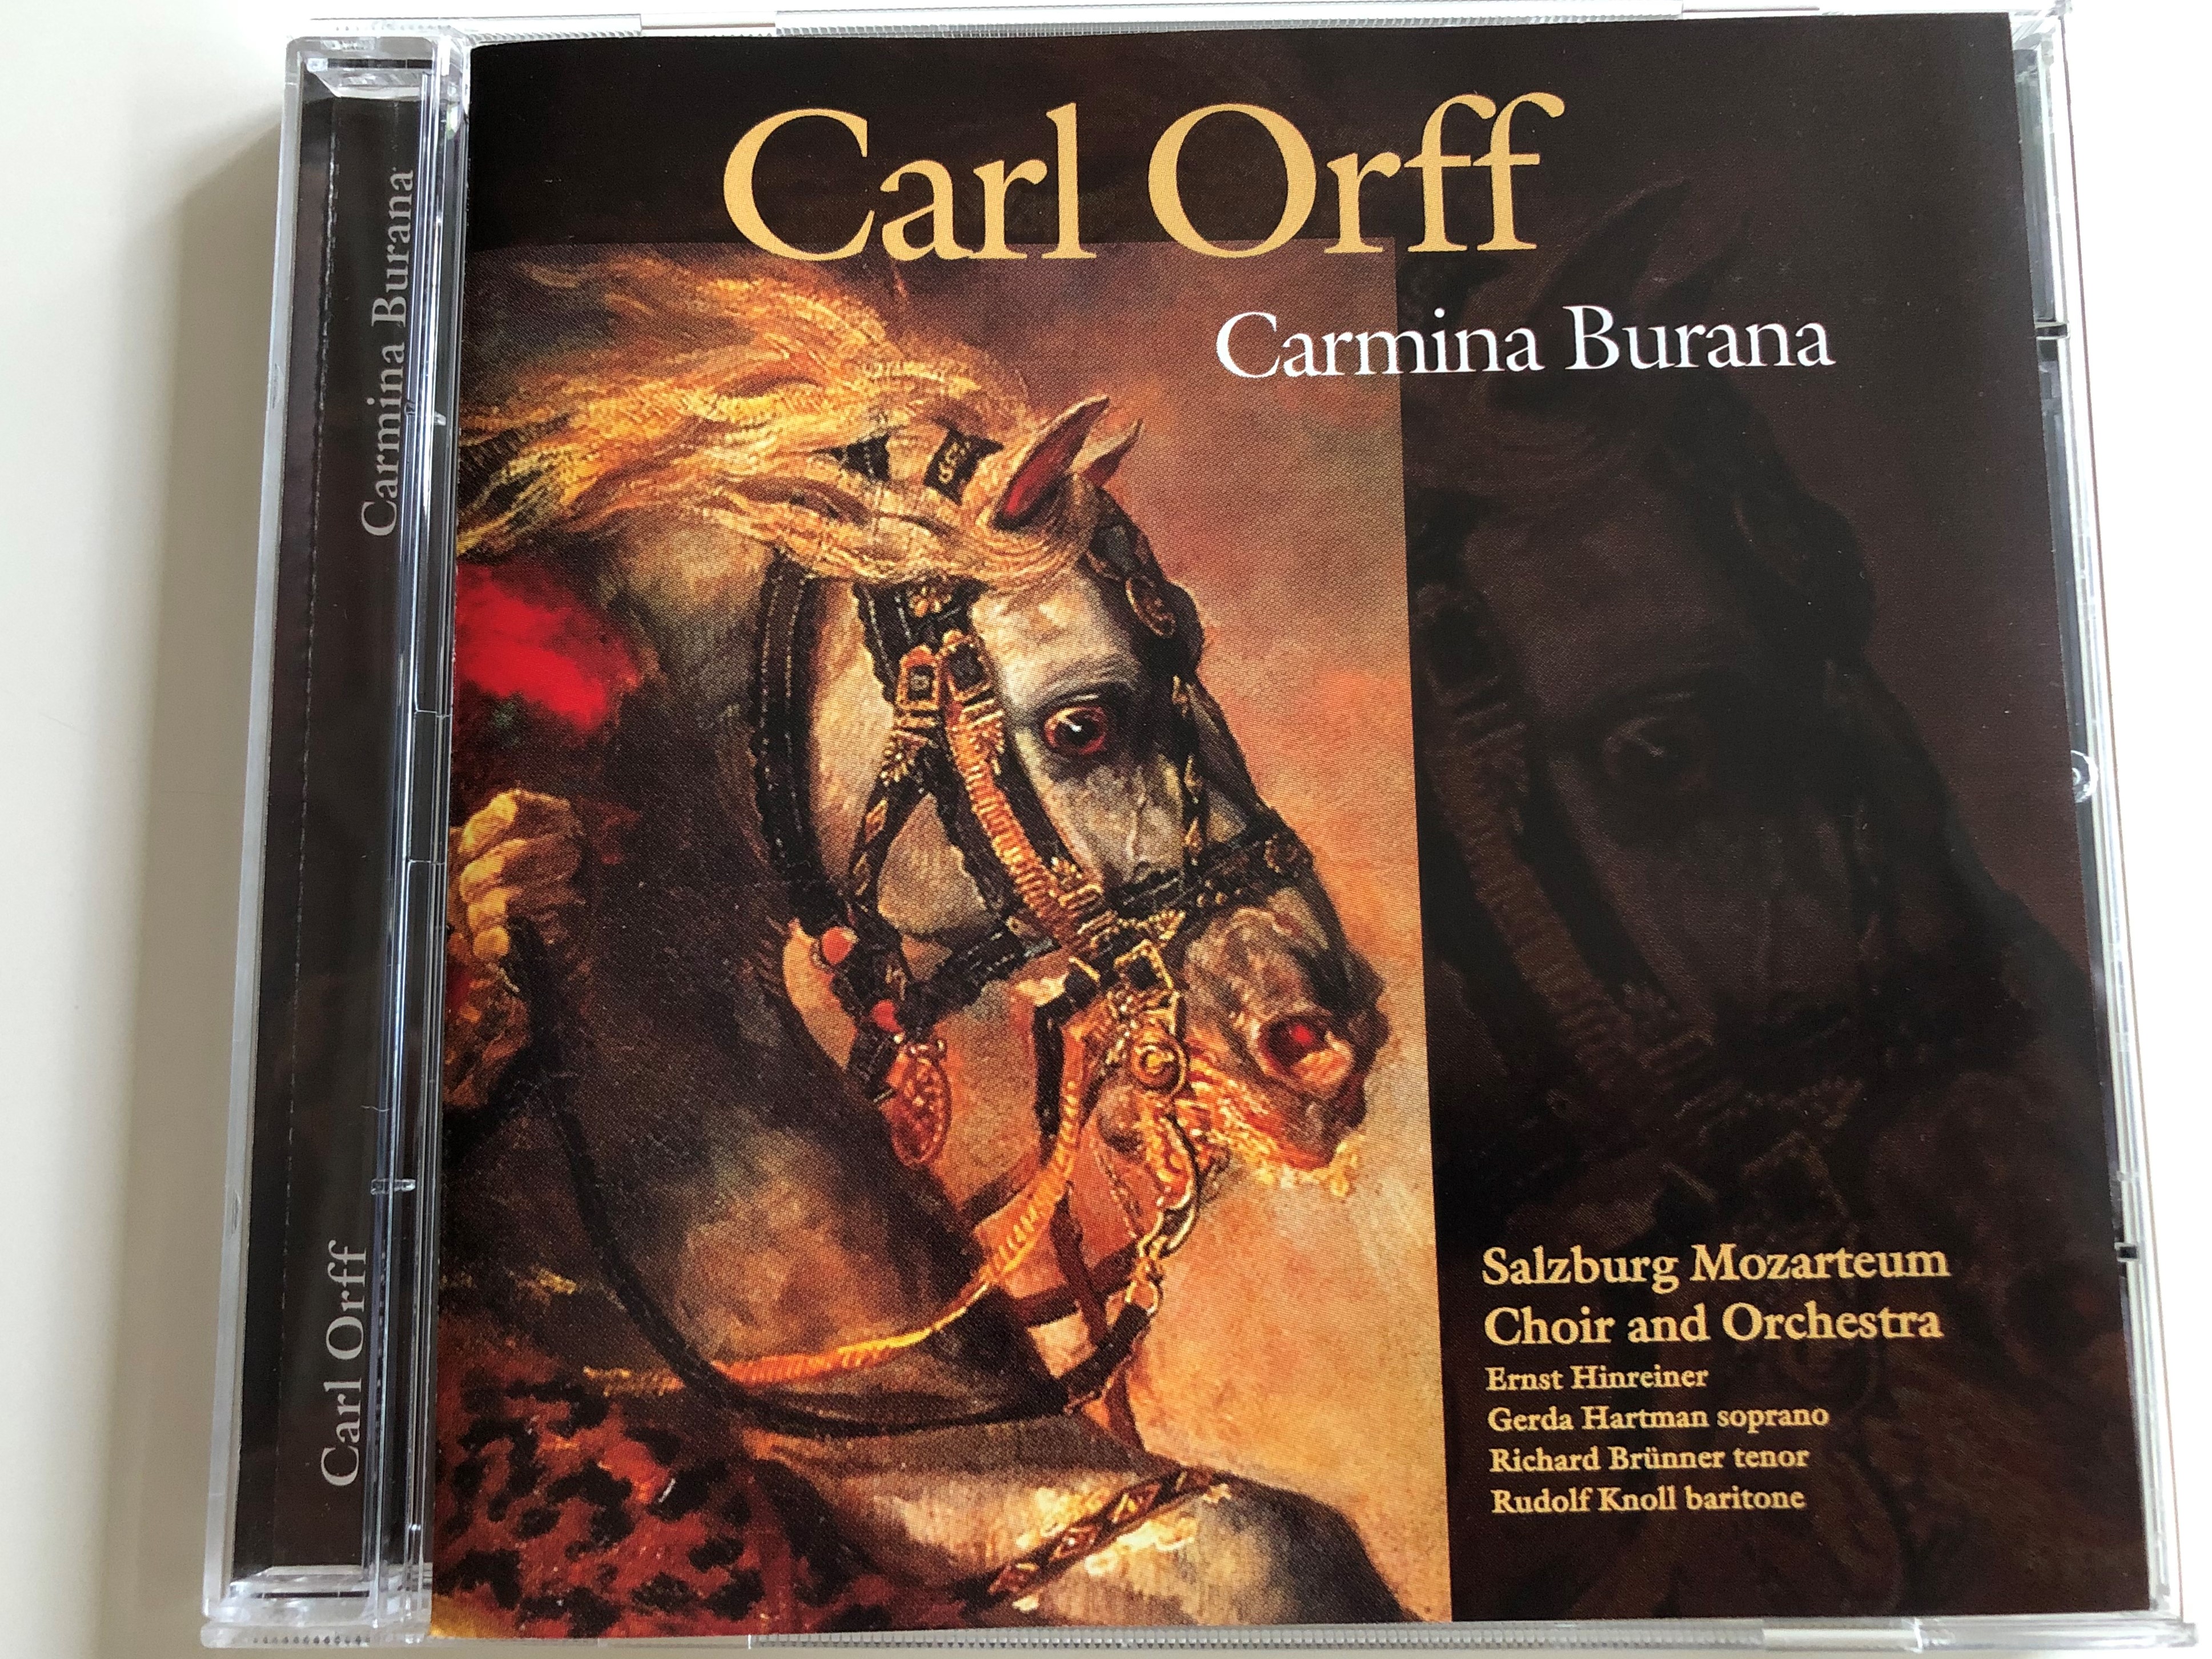 carl-orff-carmina-burana-salzburg-mozarteum-choir-and-orchestra-ernst-hinreiner-gerda-hartman-soprano-richard-br-nner-tenor-rudolf-knoll-baritone-audio-cd-1998-a-play-classics-1-.jpg